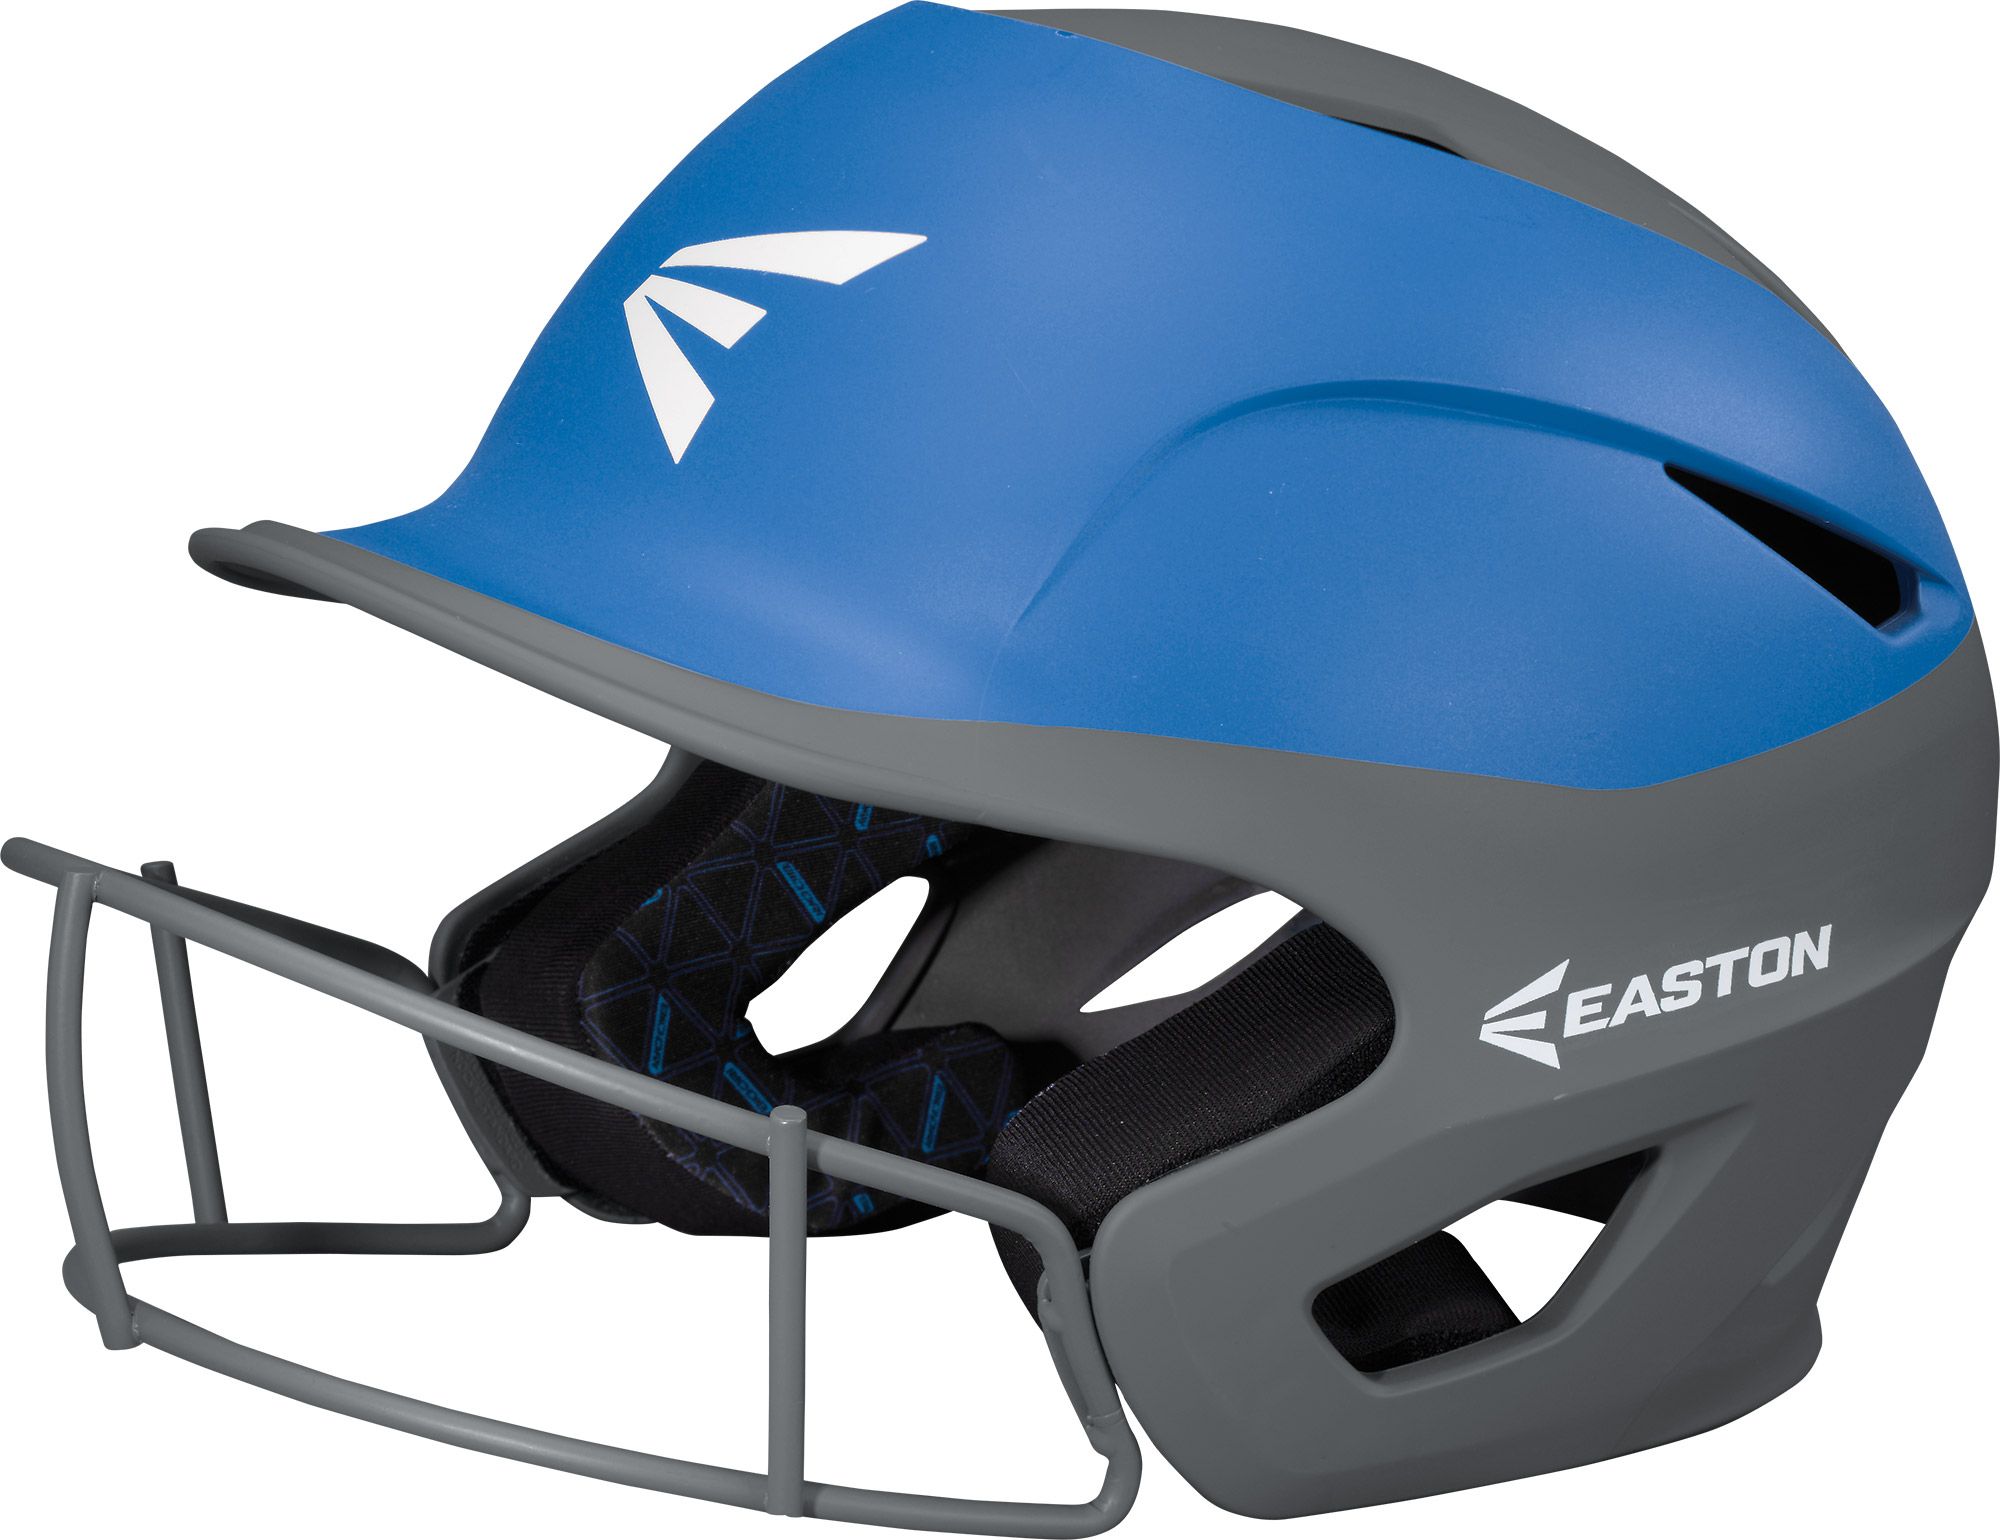 Easton Prowess Fastpitch Softball Helmet